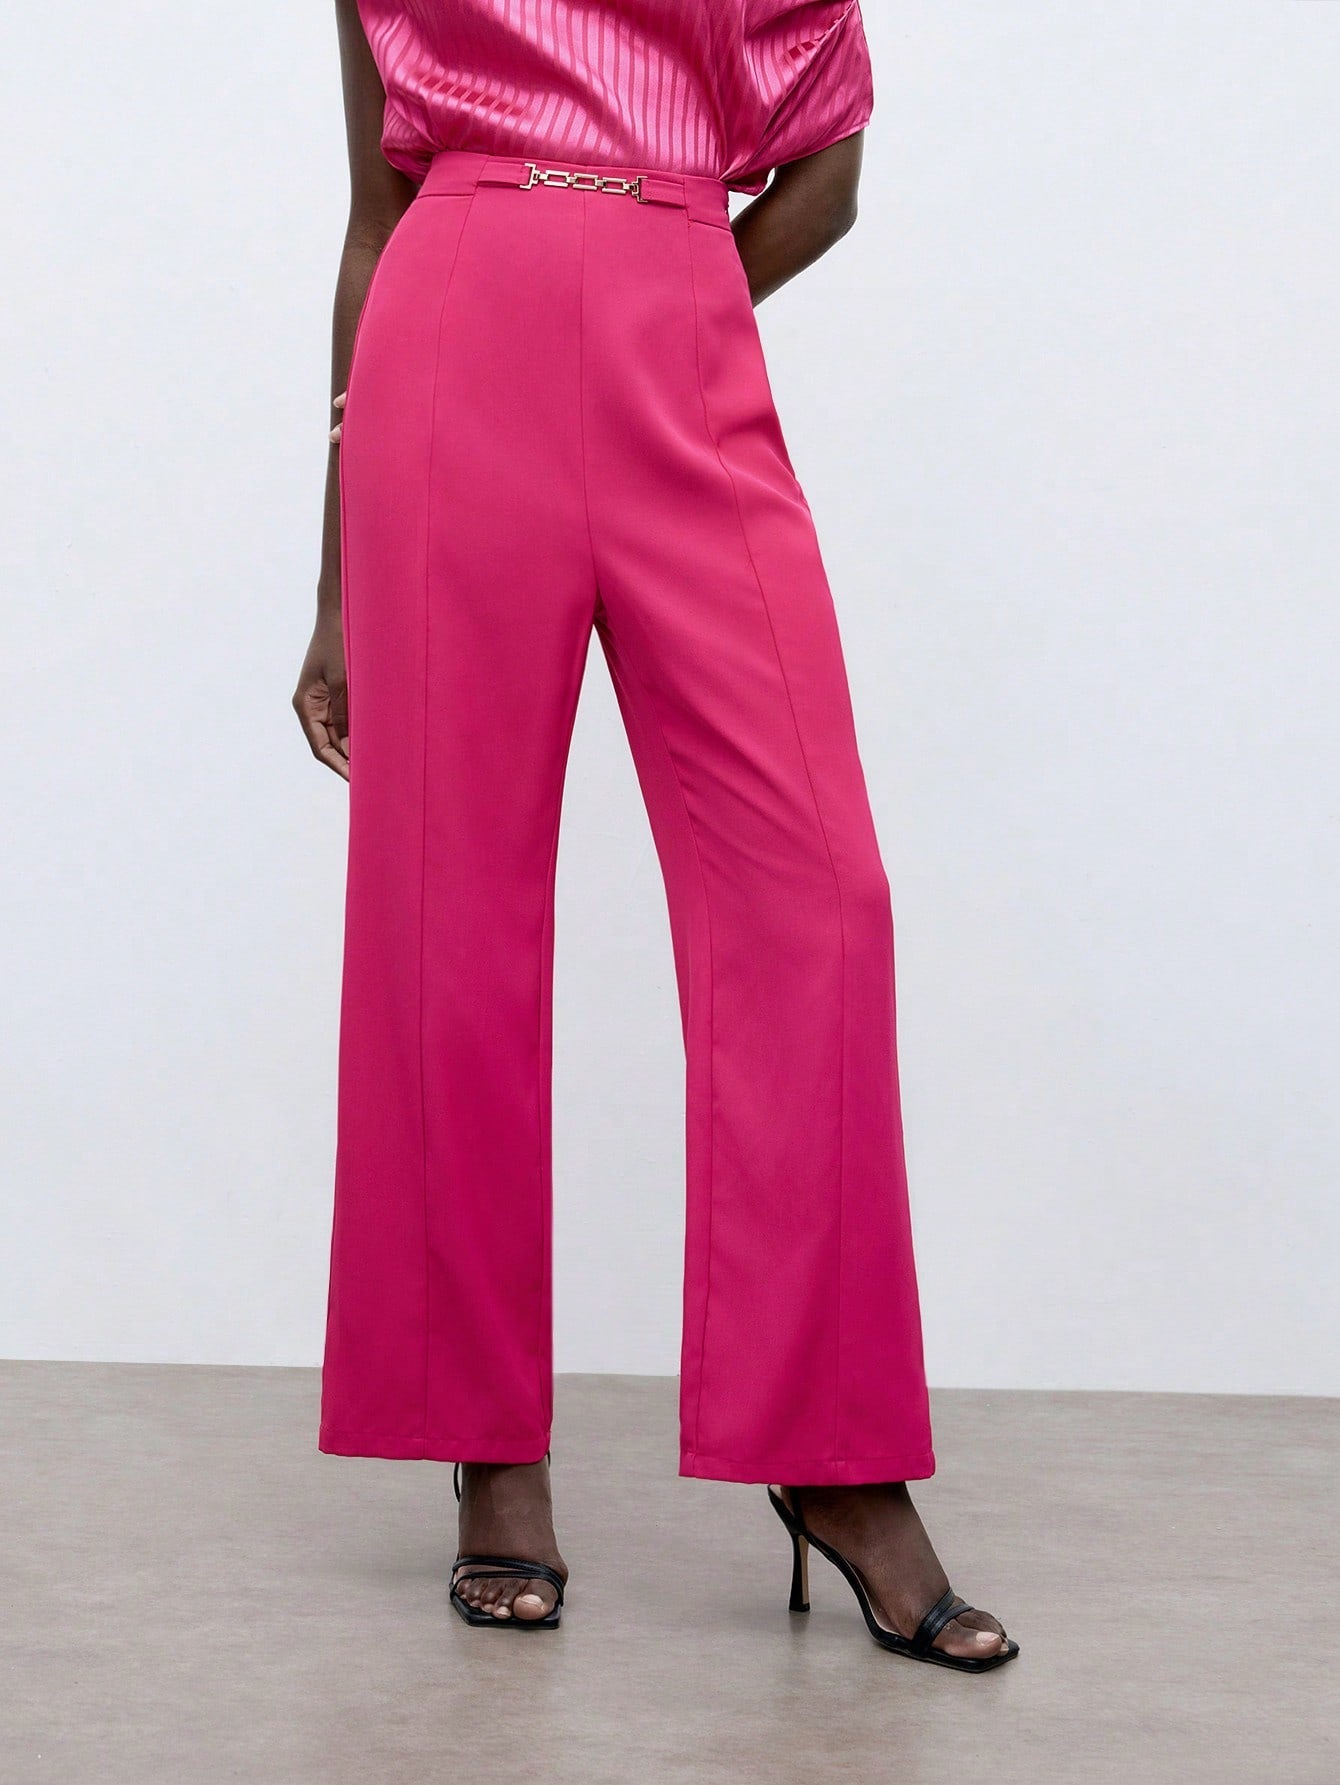 Women's Solid Color Fashionable Suit Pants - Hot Pink